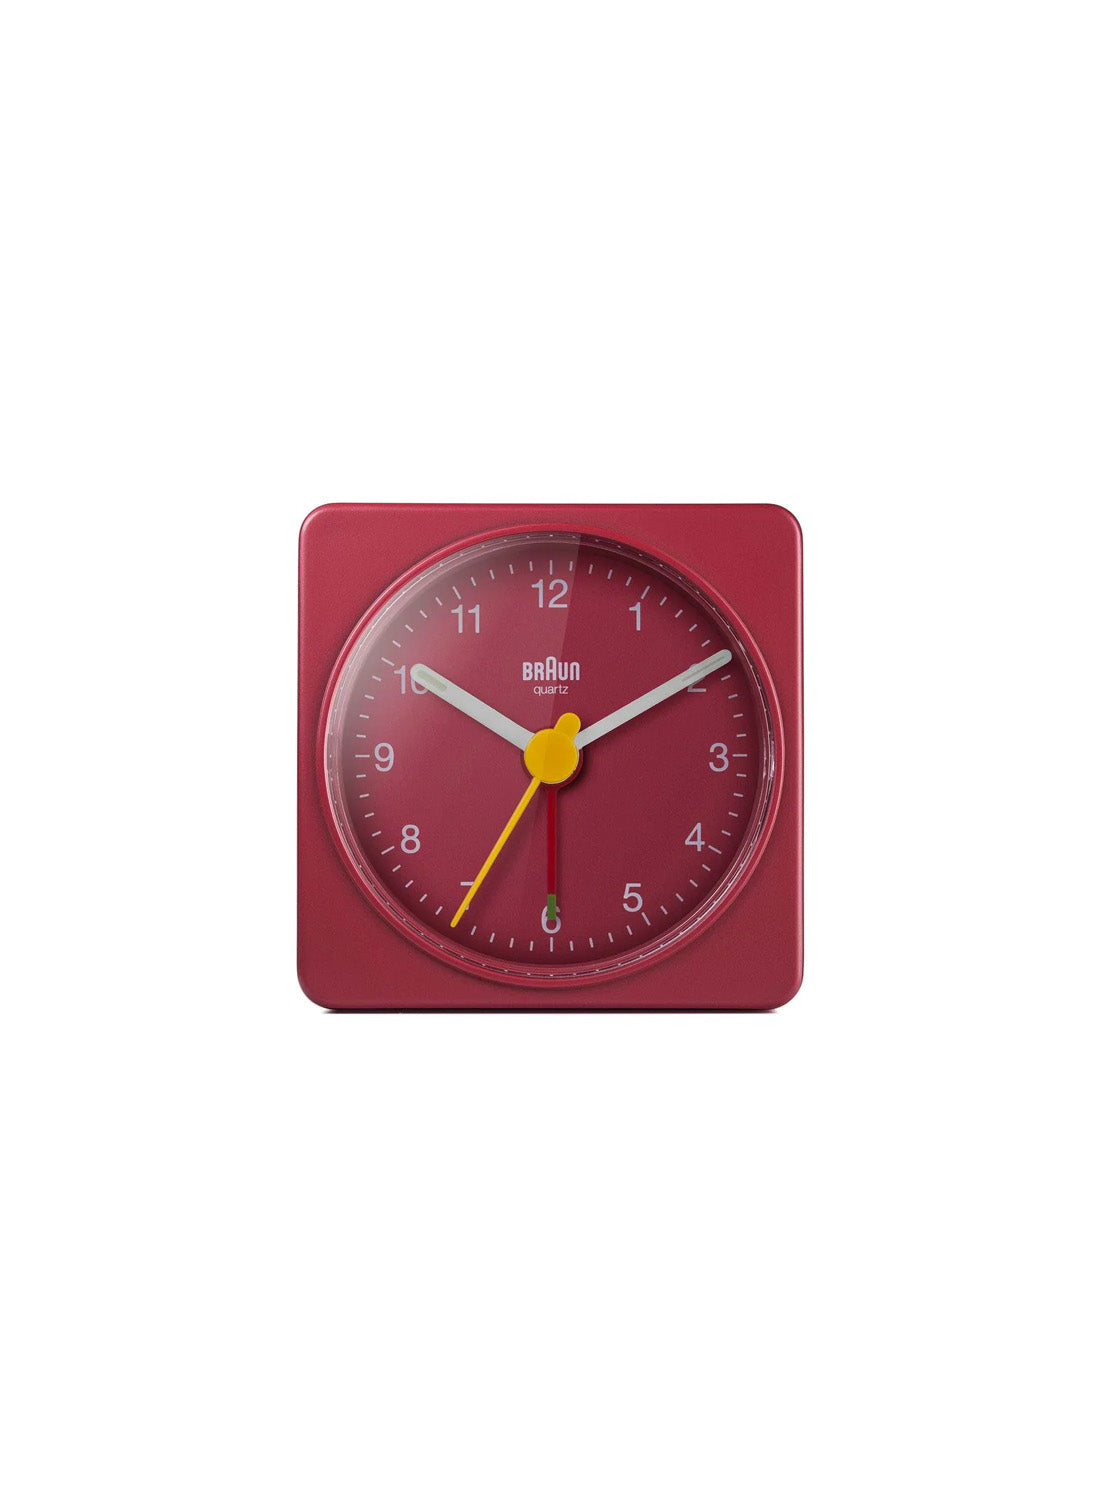 Braun Travel Alarm Clock BC02 - Red